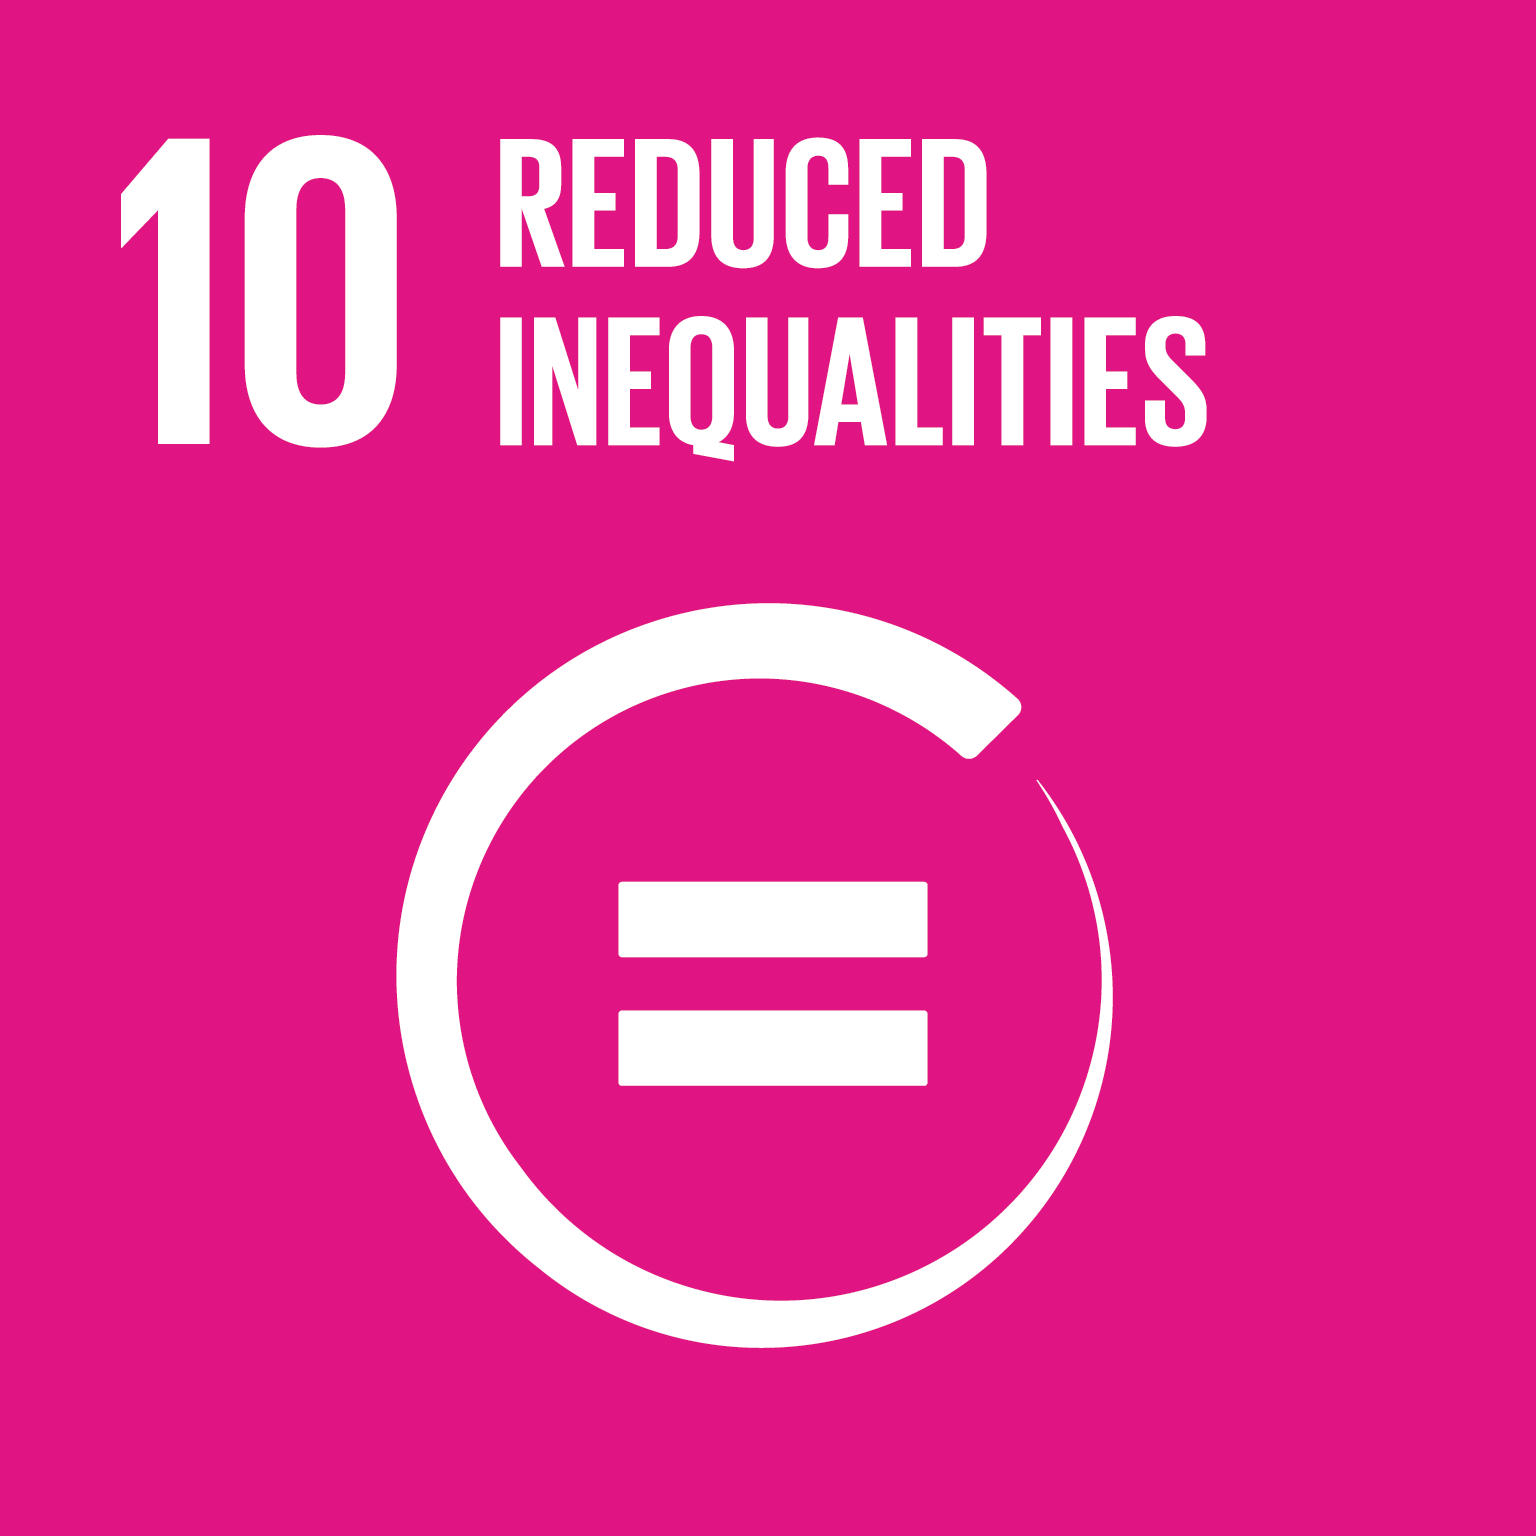 10. Reduce inequalities 